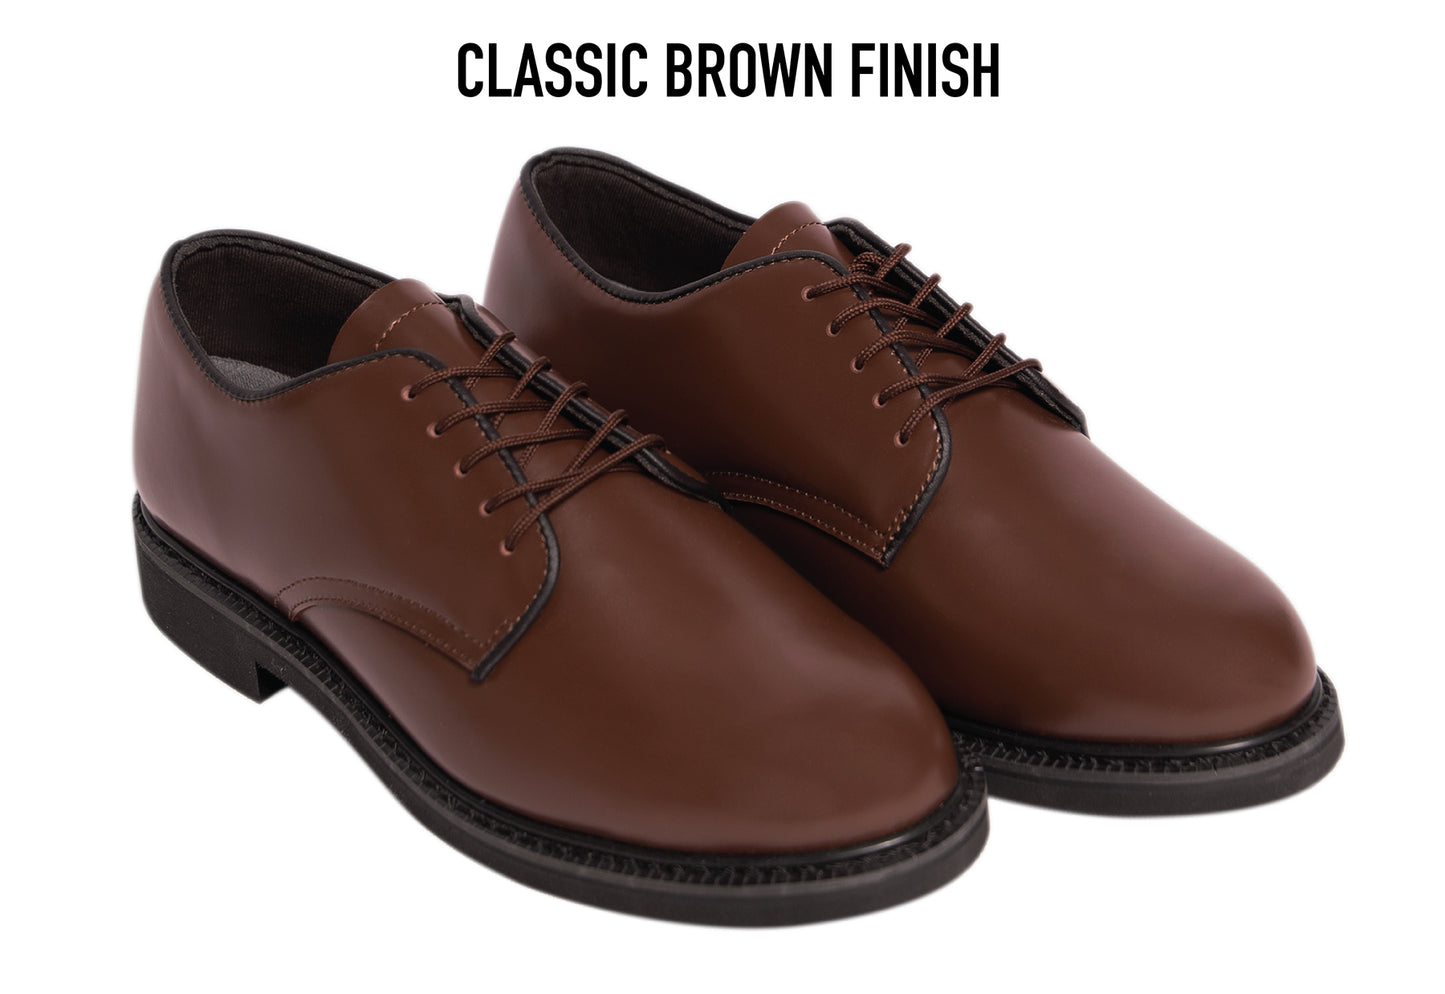 Rothco Brown Uniform Oxford Shoes